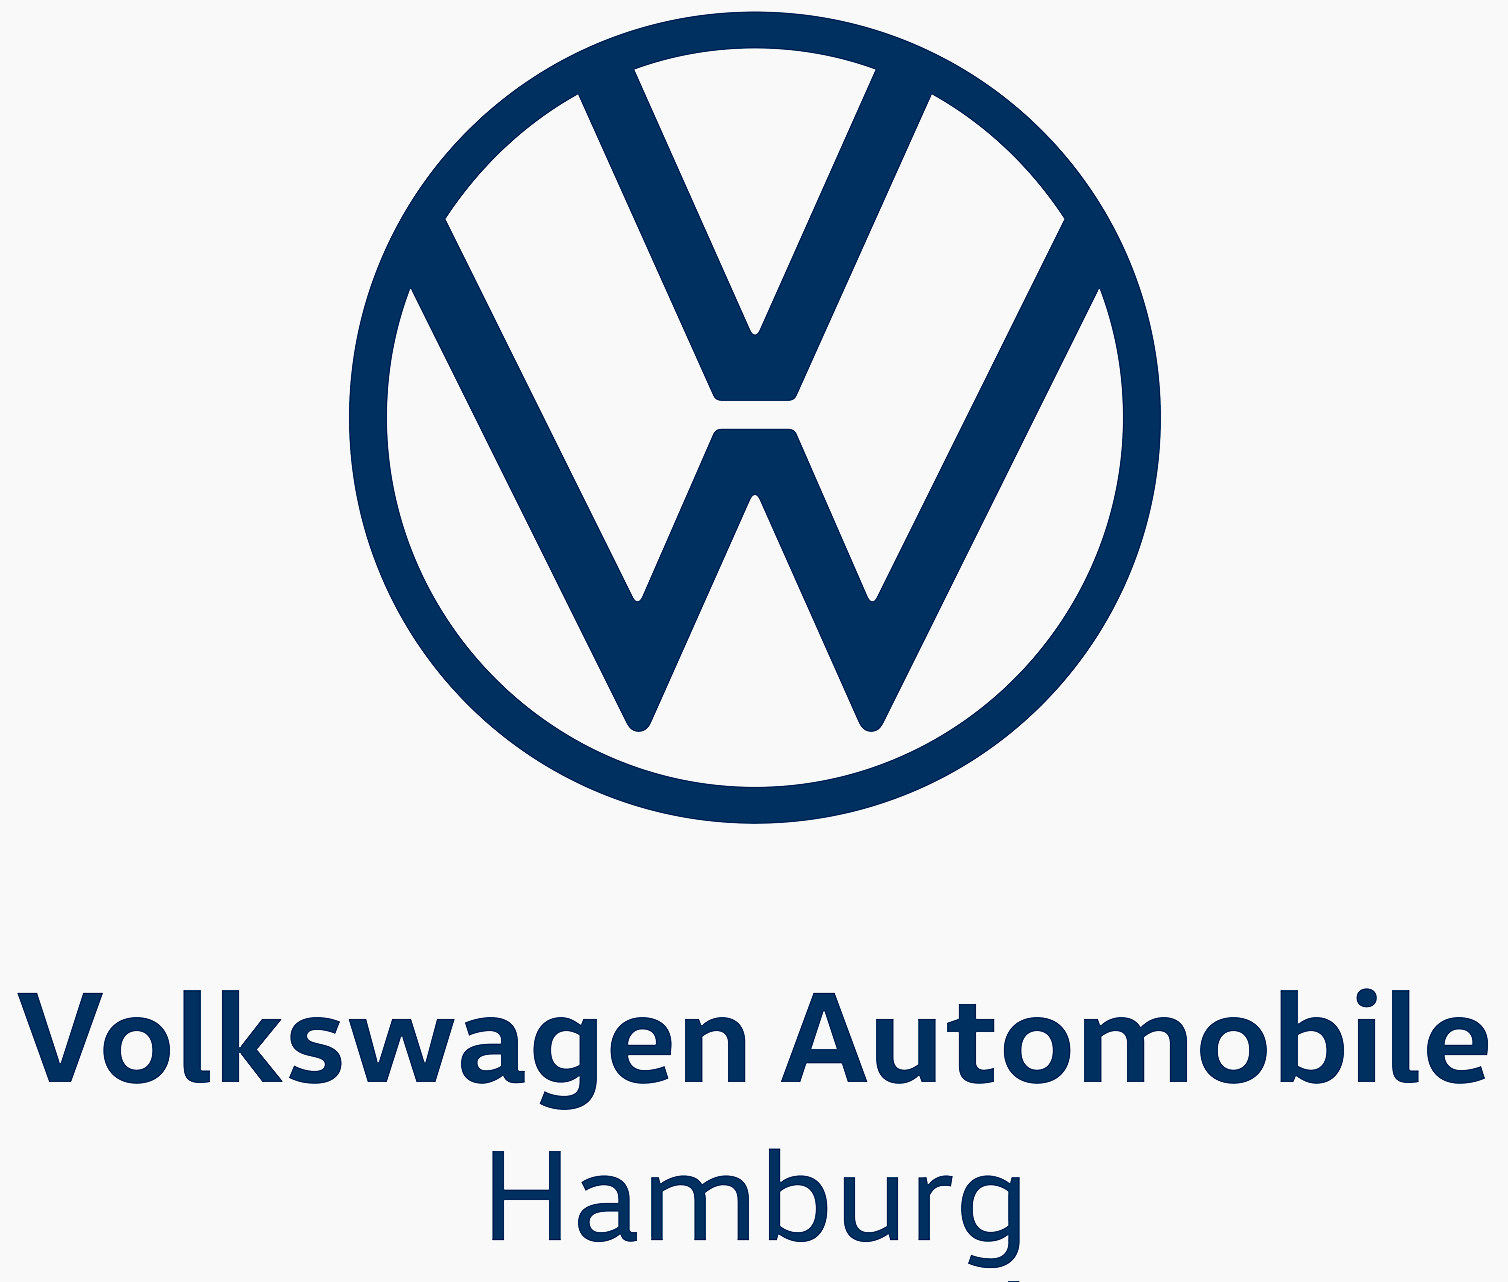 VW Hamburg Automobile Logo